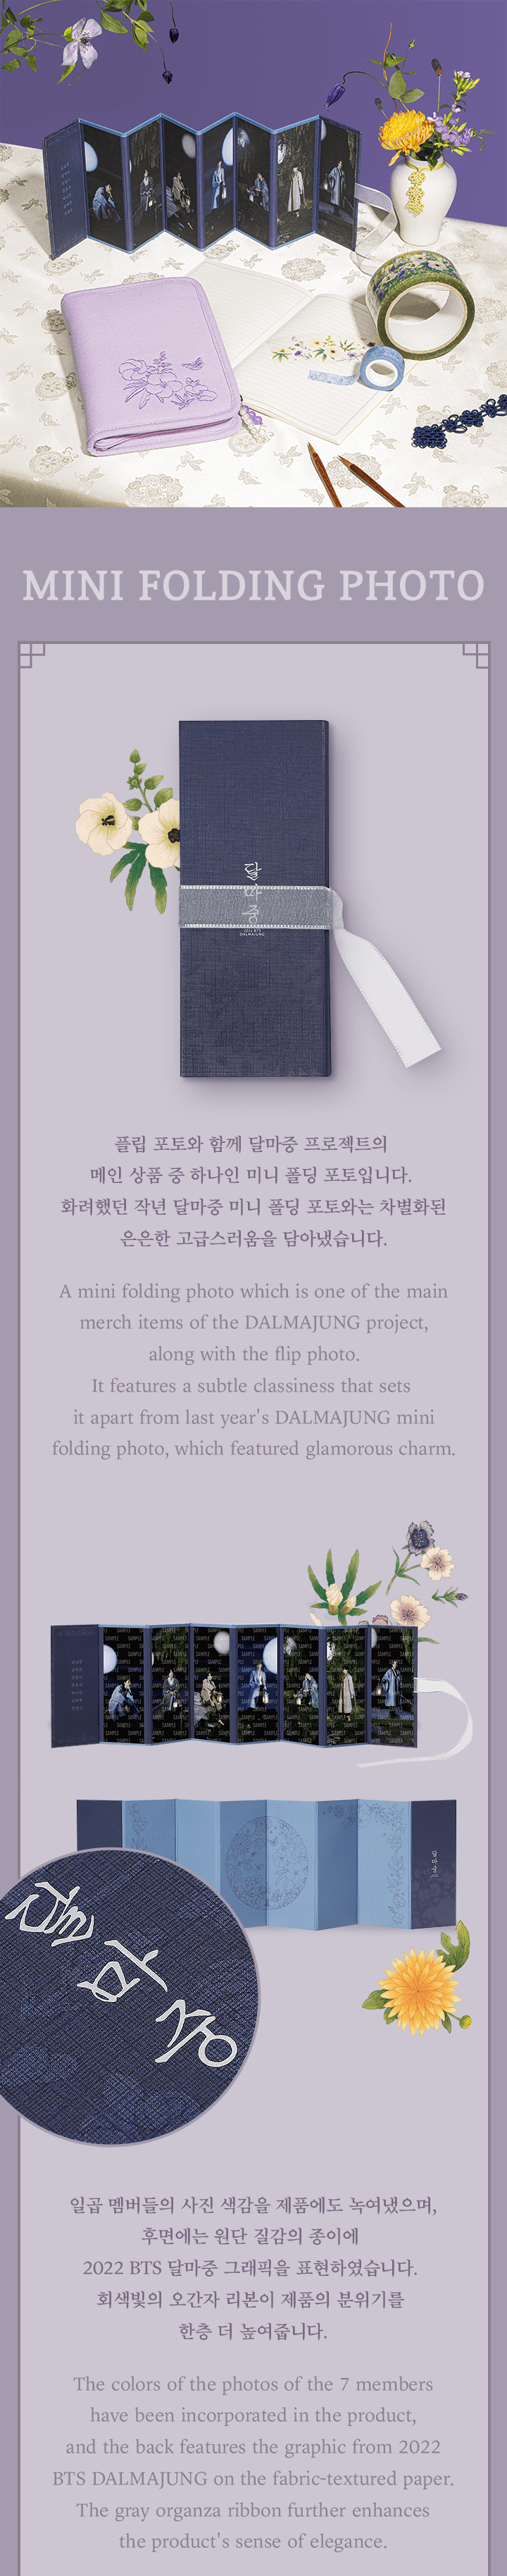 BTS - Mini Folding Photo [2022 DALMAJUNG]